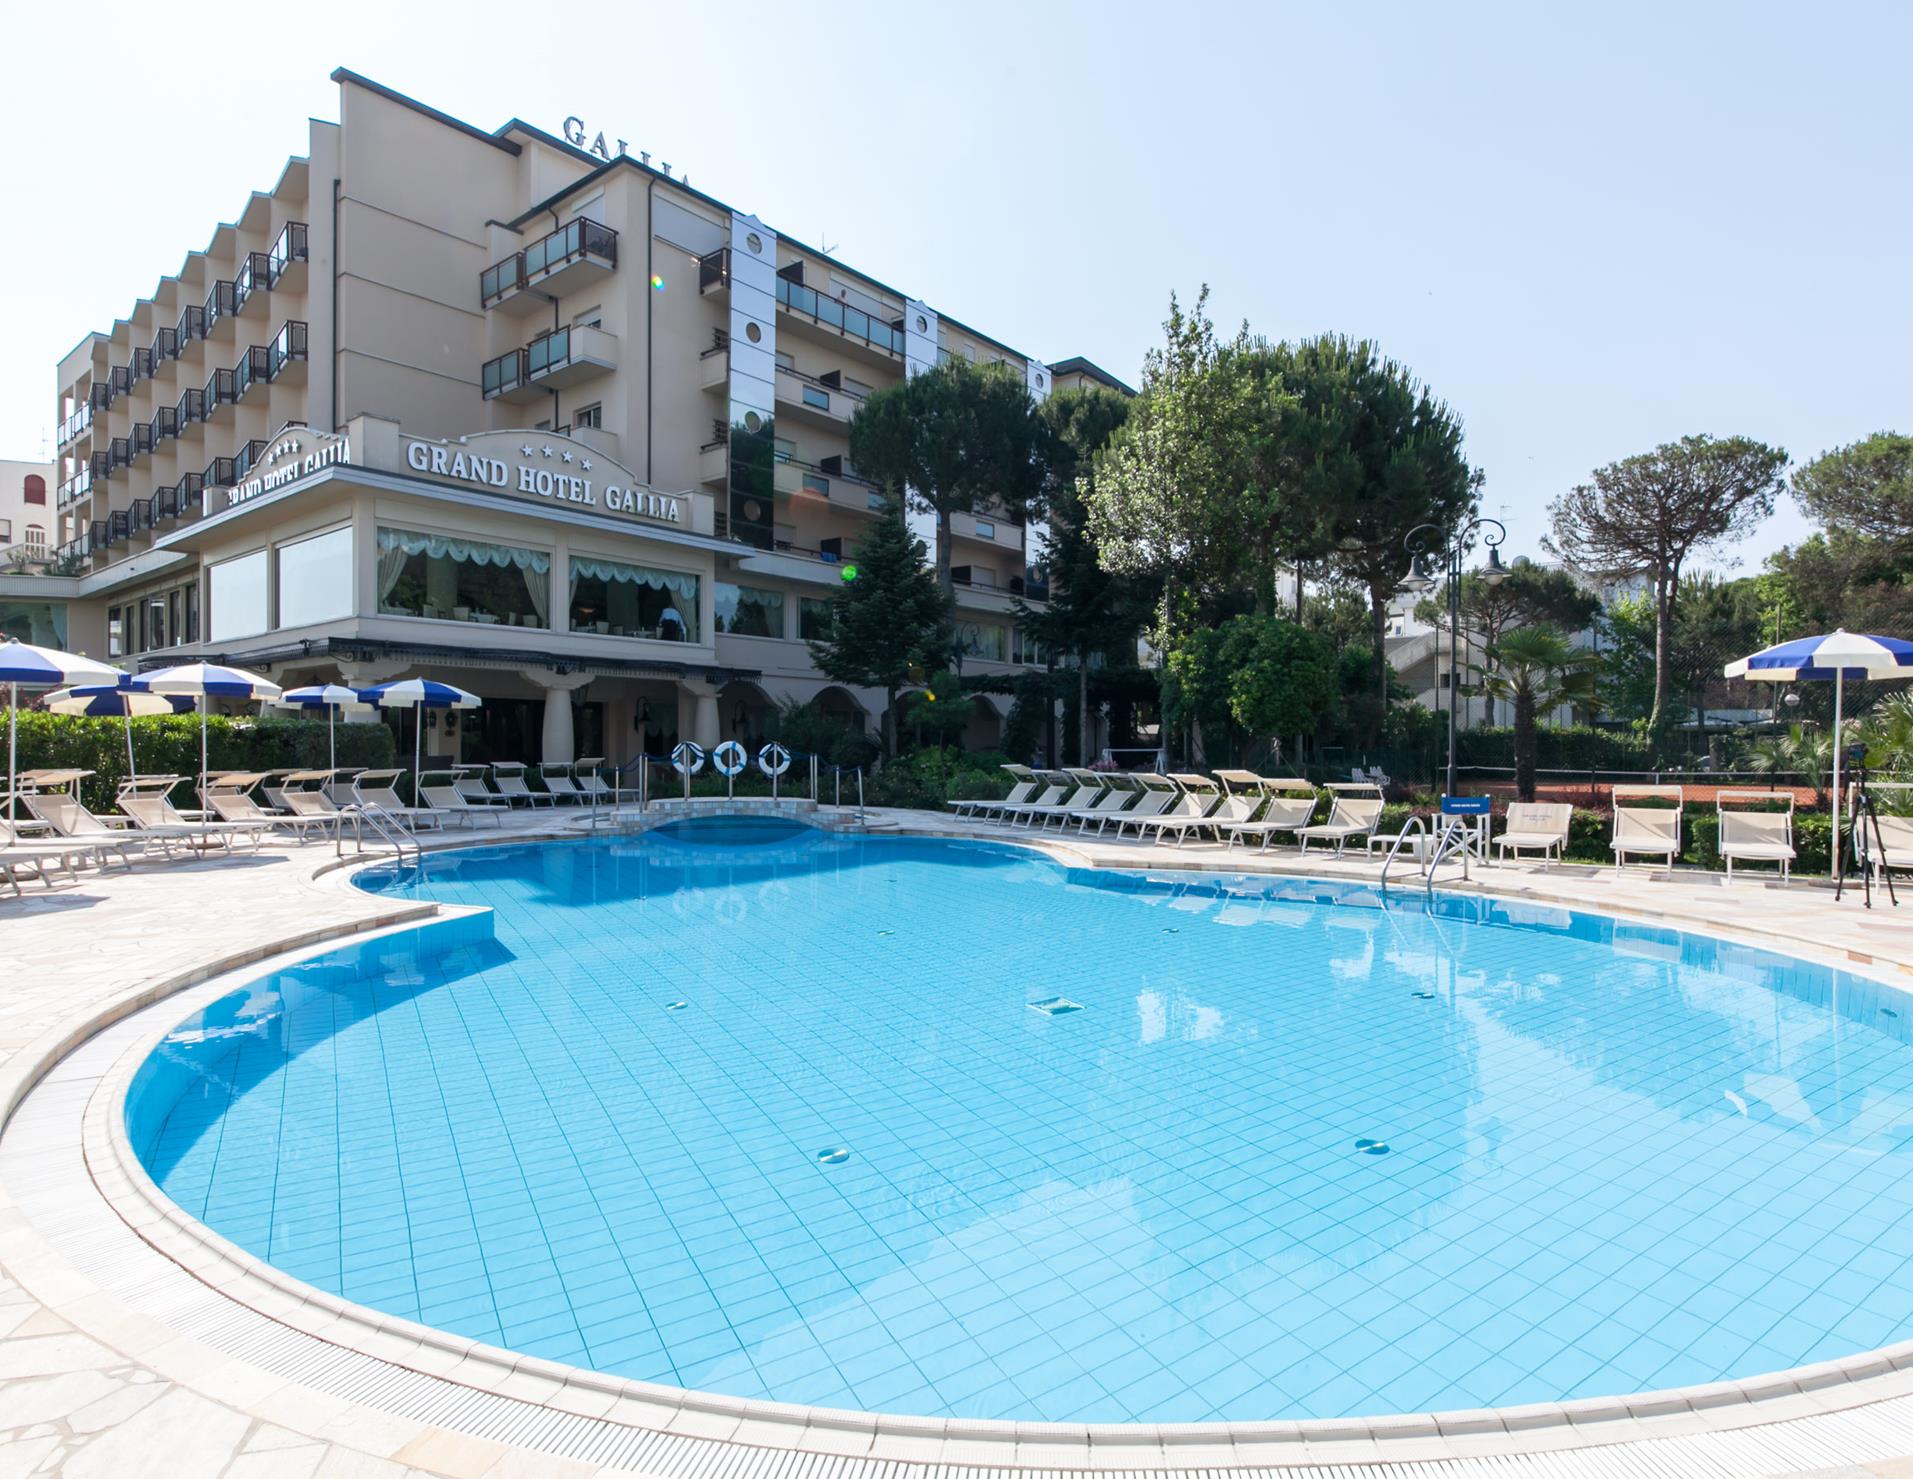 Grand Hotel Gallia - Swimming Pool